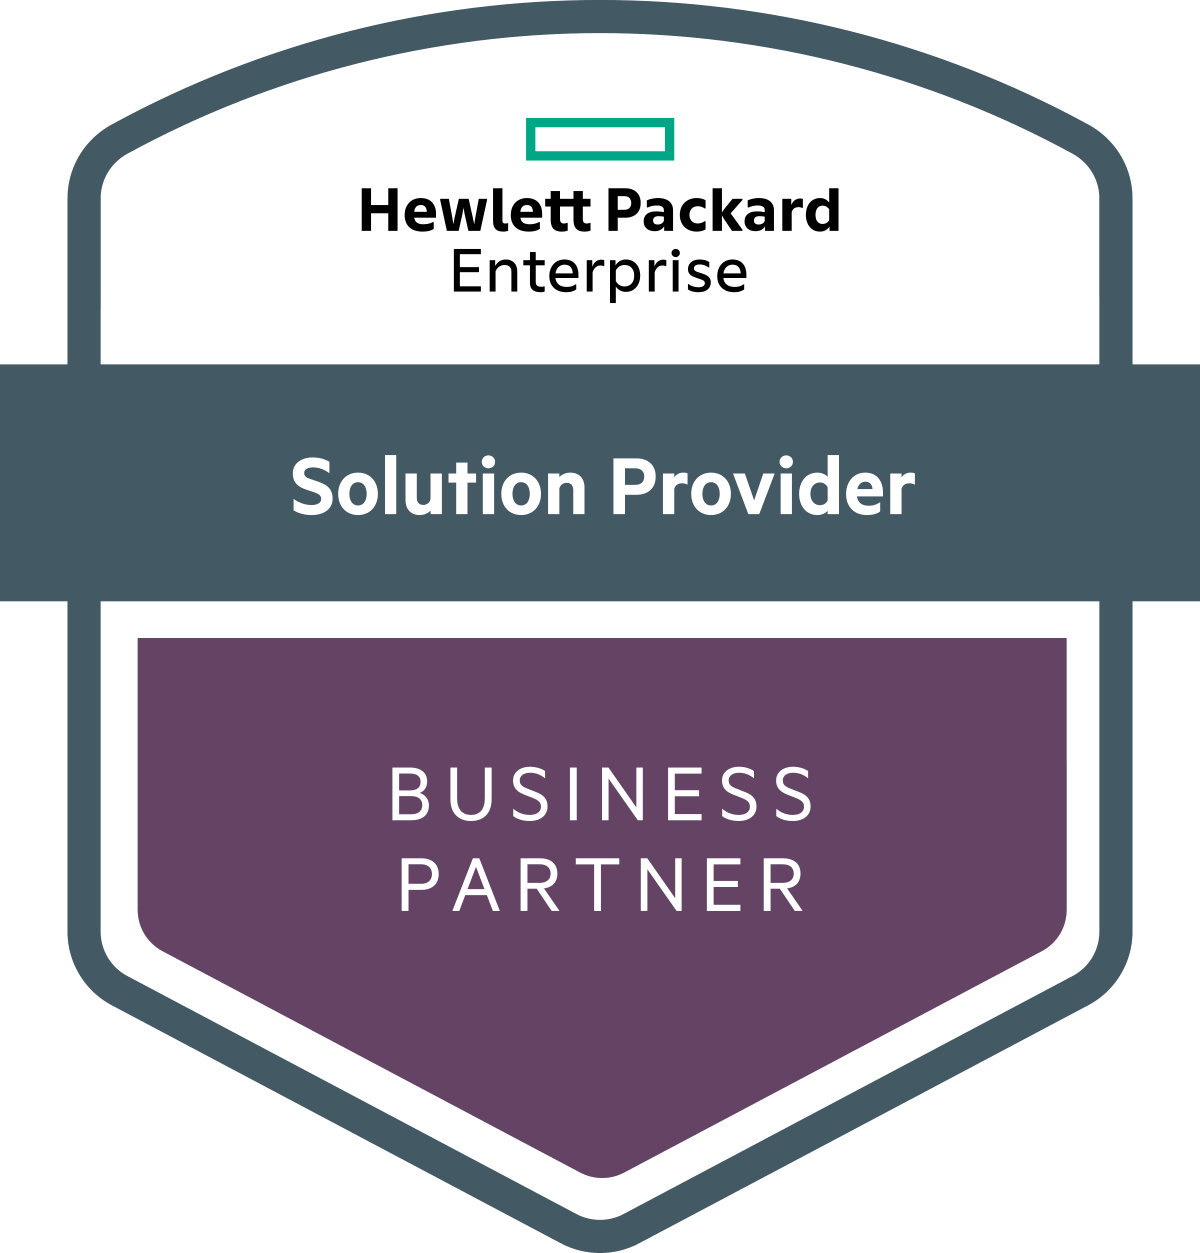 Hewlett Packard Enterprise, Solution Provider, Business Partner.